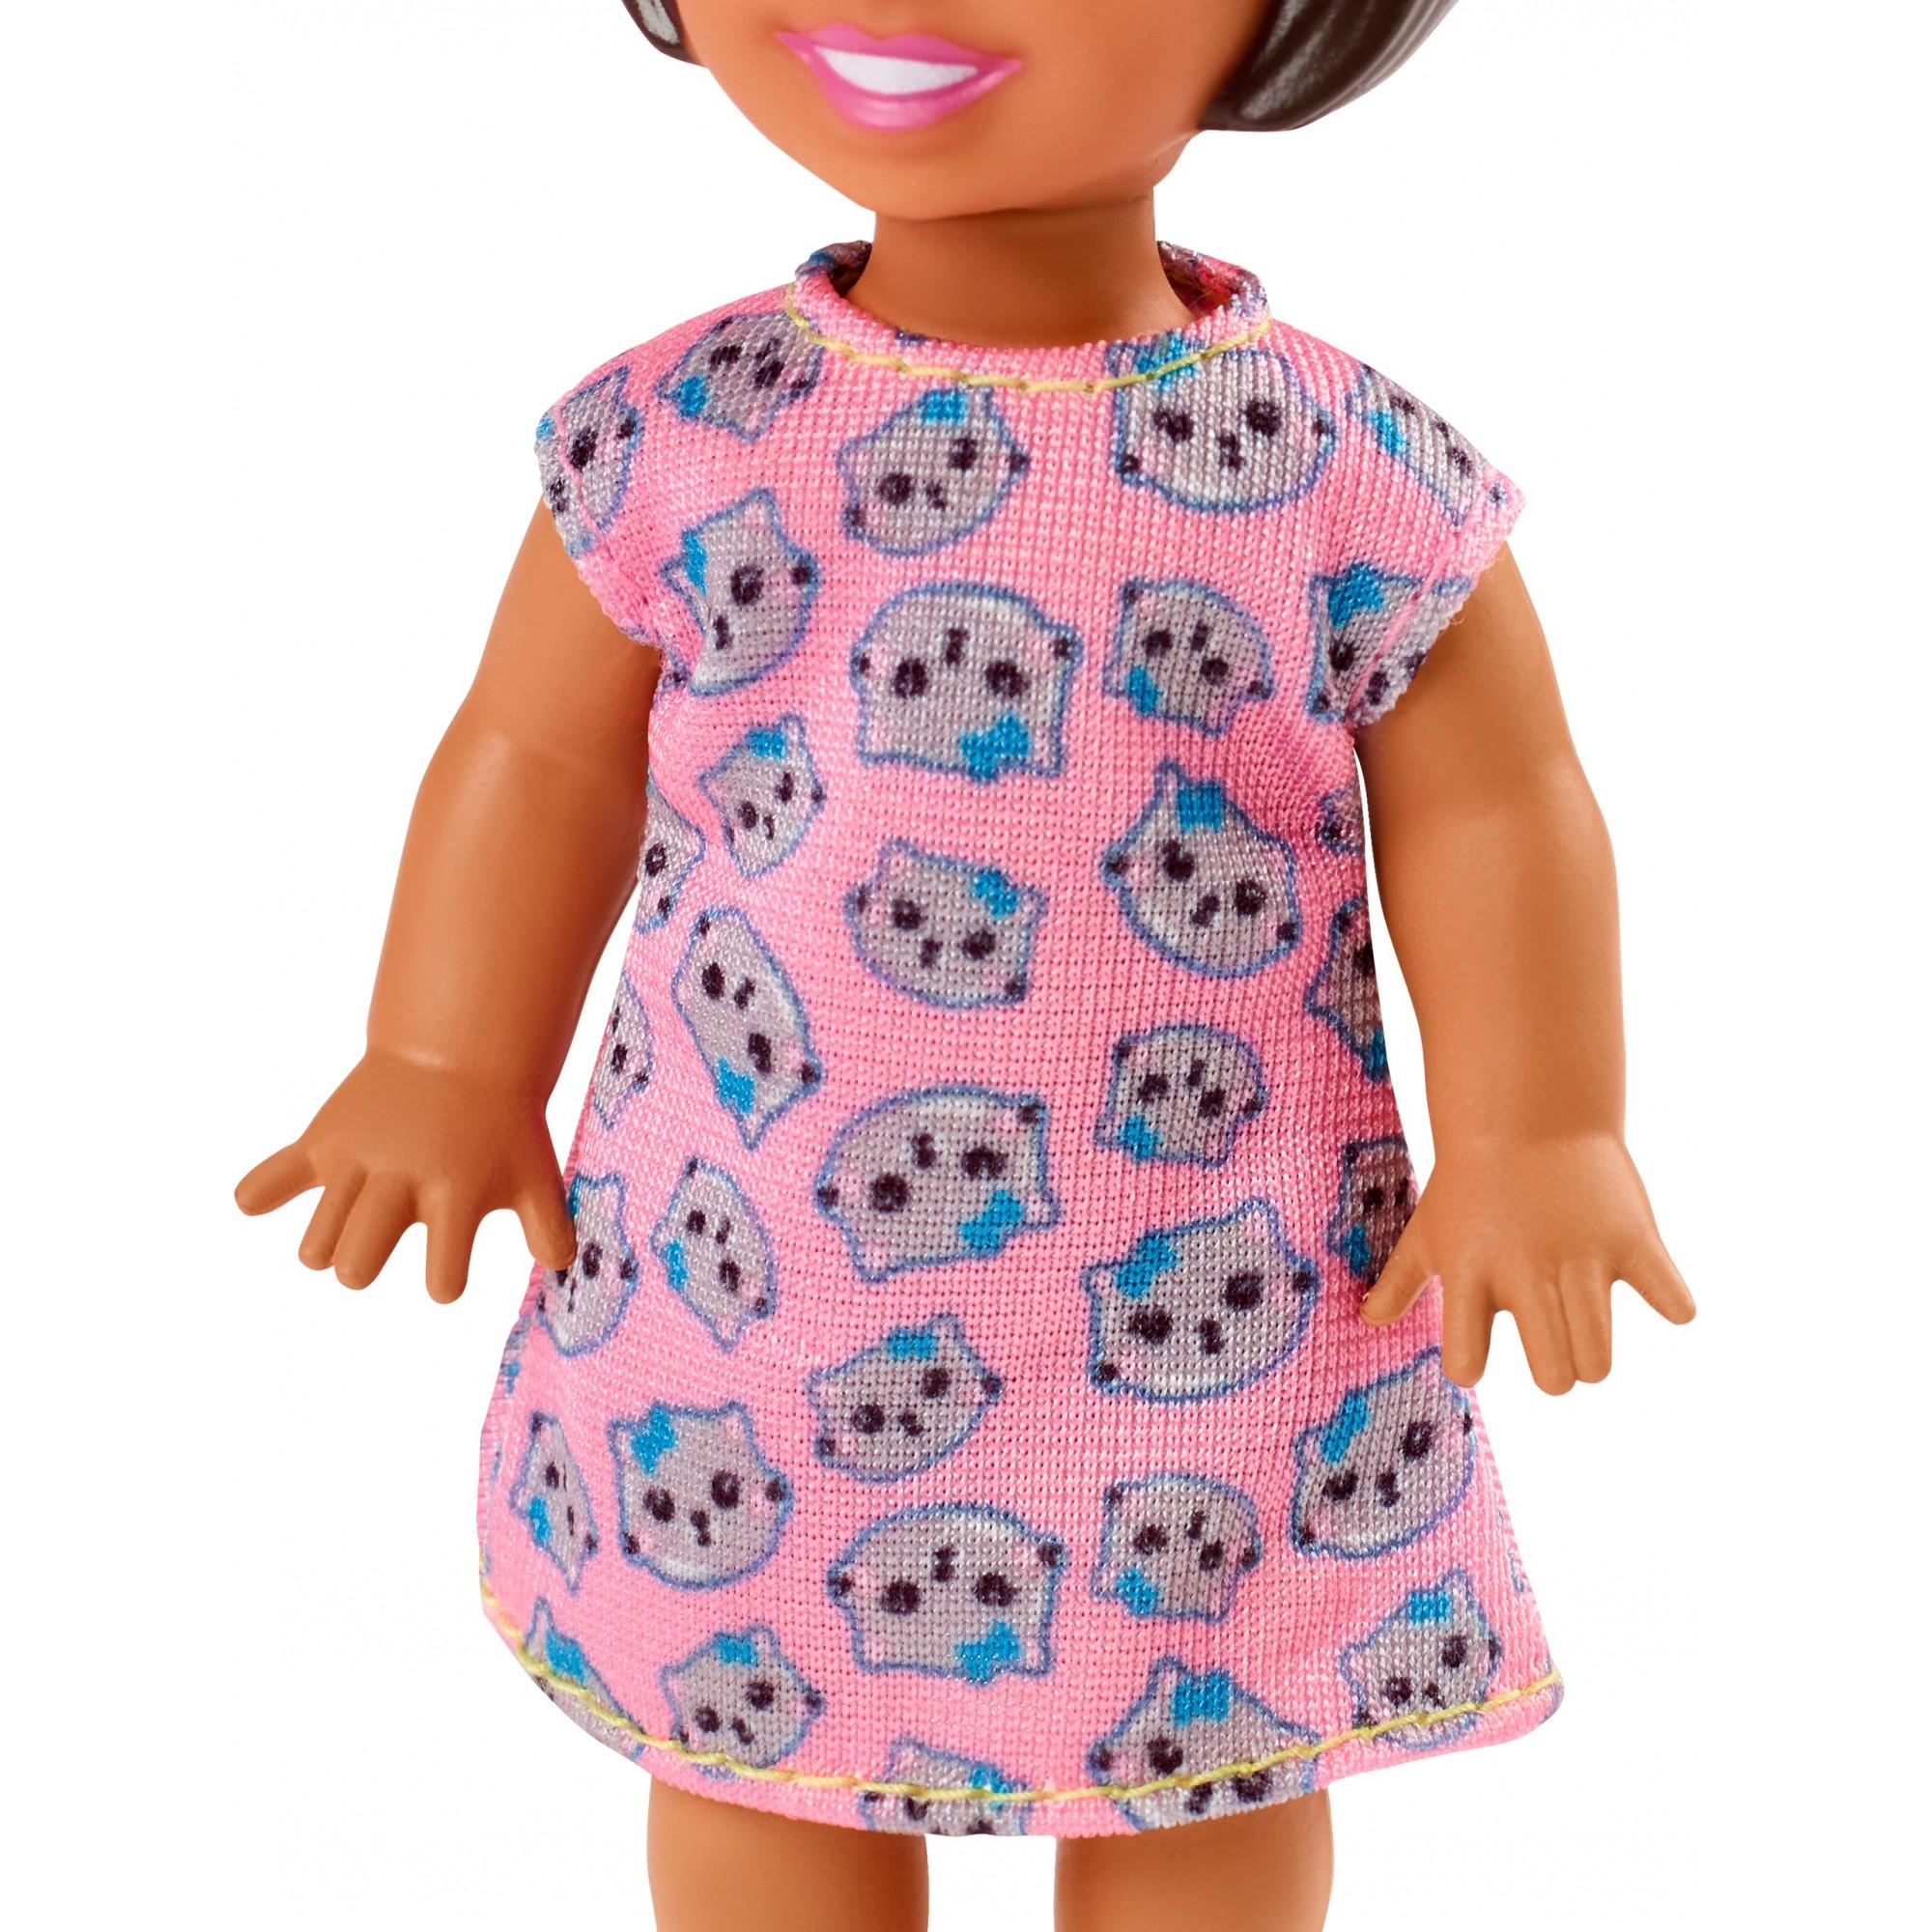 Barbie Skipper Babysitters Inc Doll & Playset - image 3 of 5